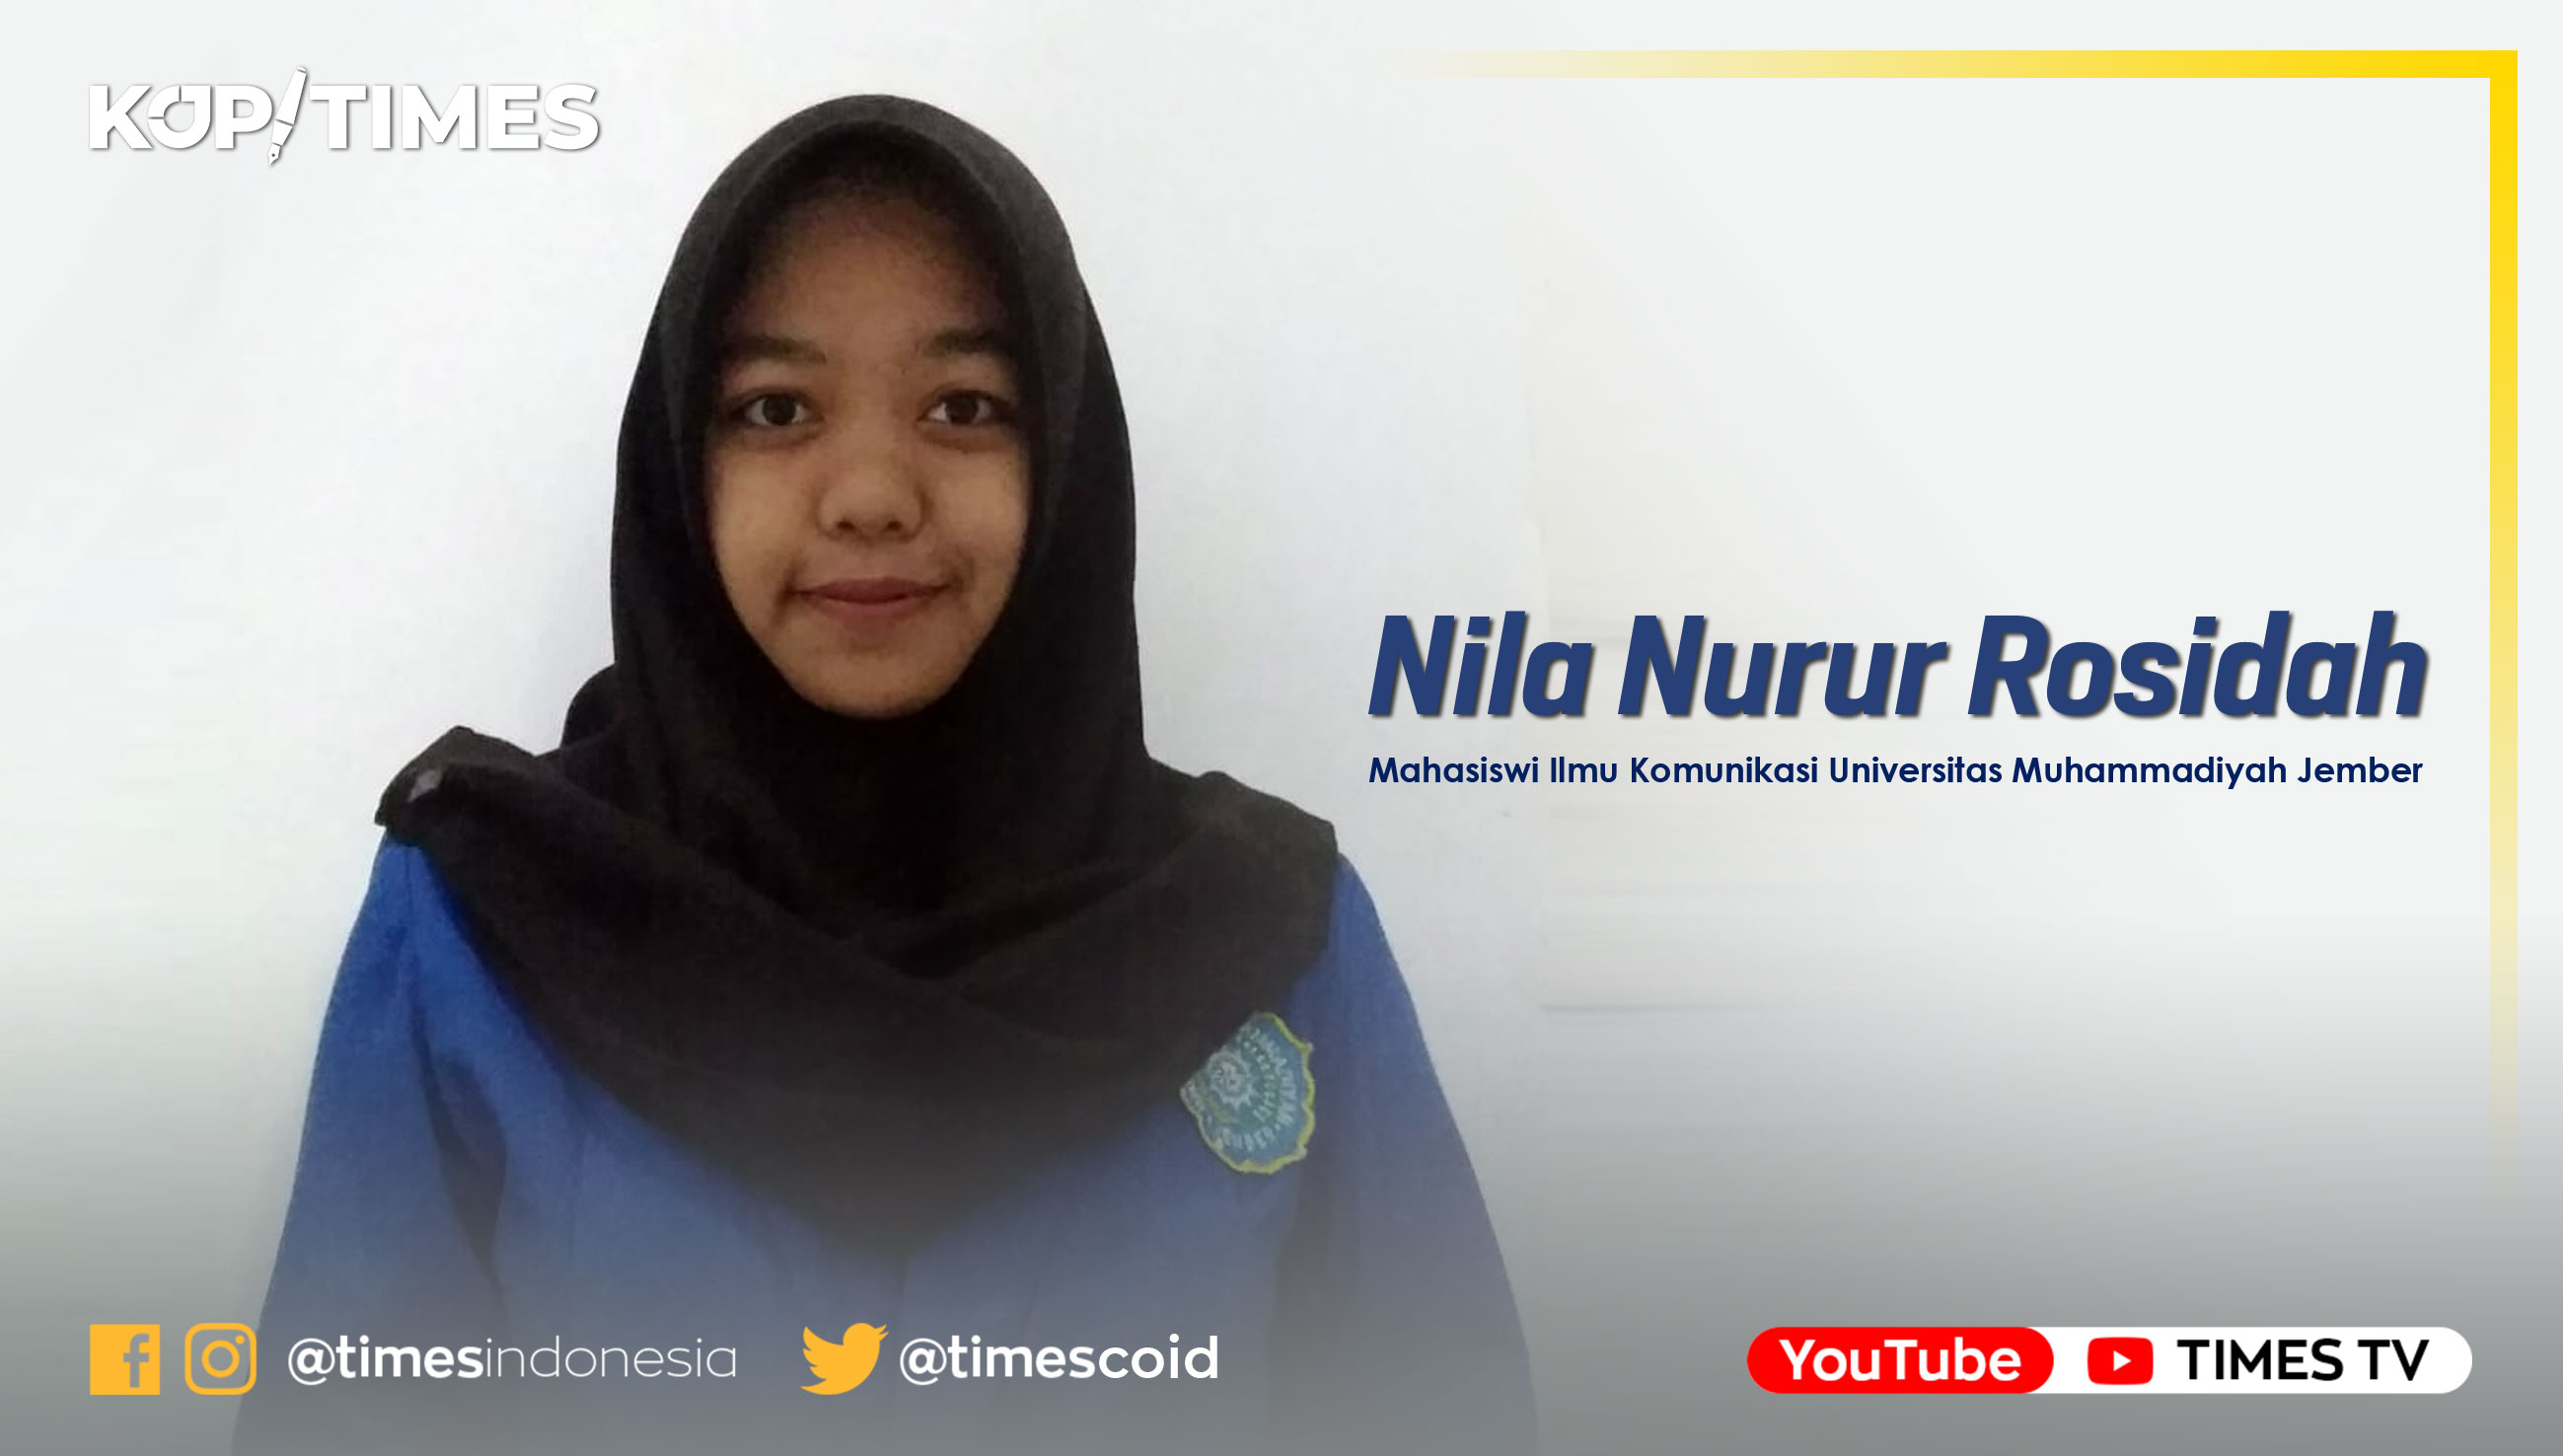 Nila Nurur Rosidah, Mahasiswi aktif prodi Ilmu Komunikasi Fakultas Ilmu Sosial dan Ilmu Politik Universitas Muhammadiyah Jember.